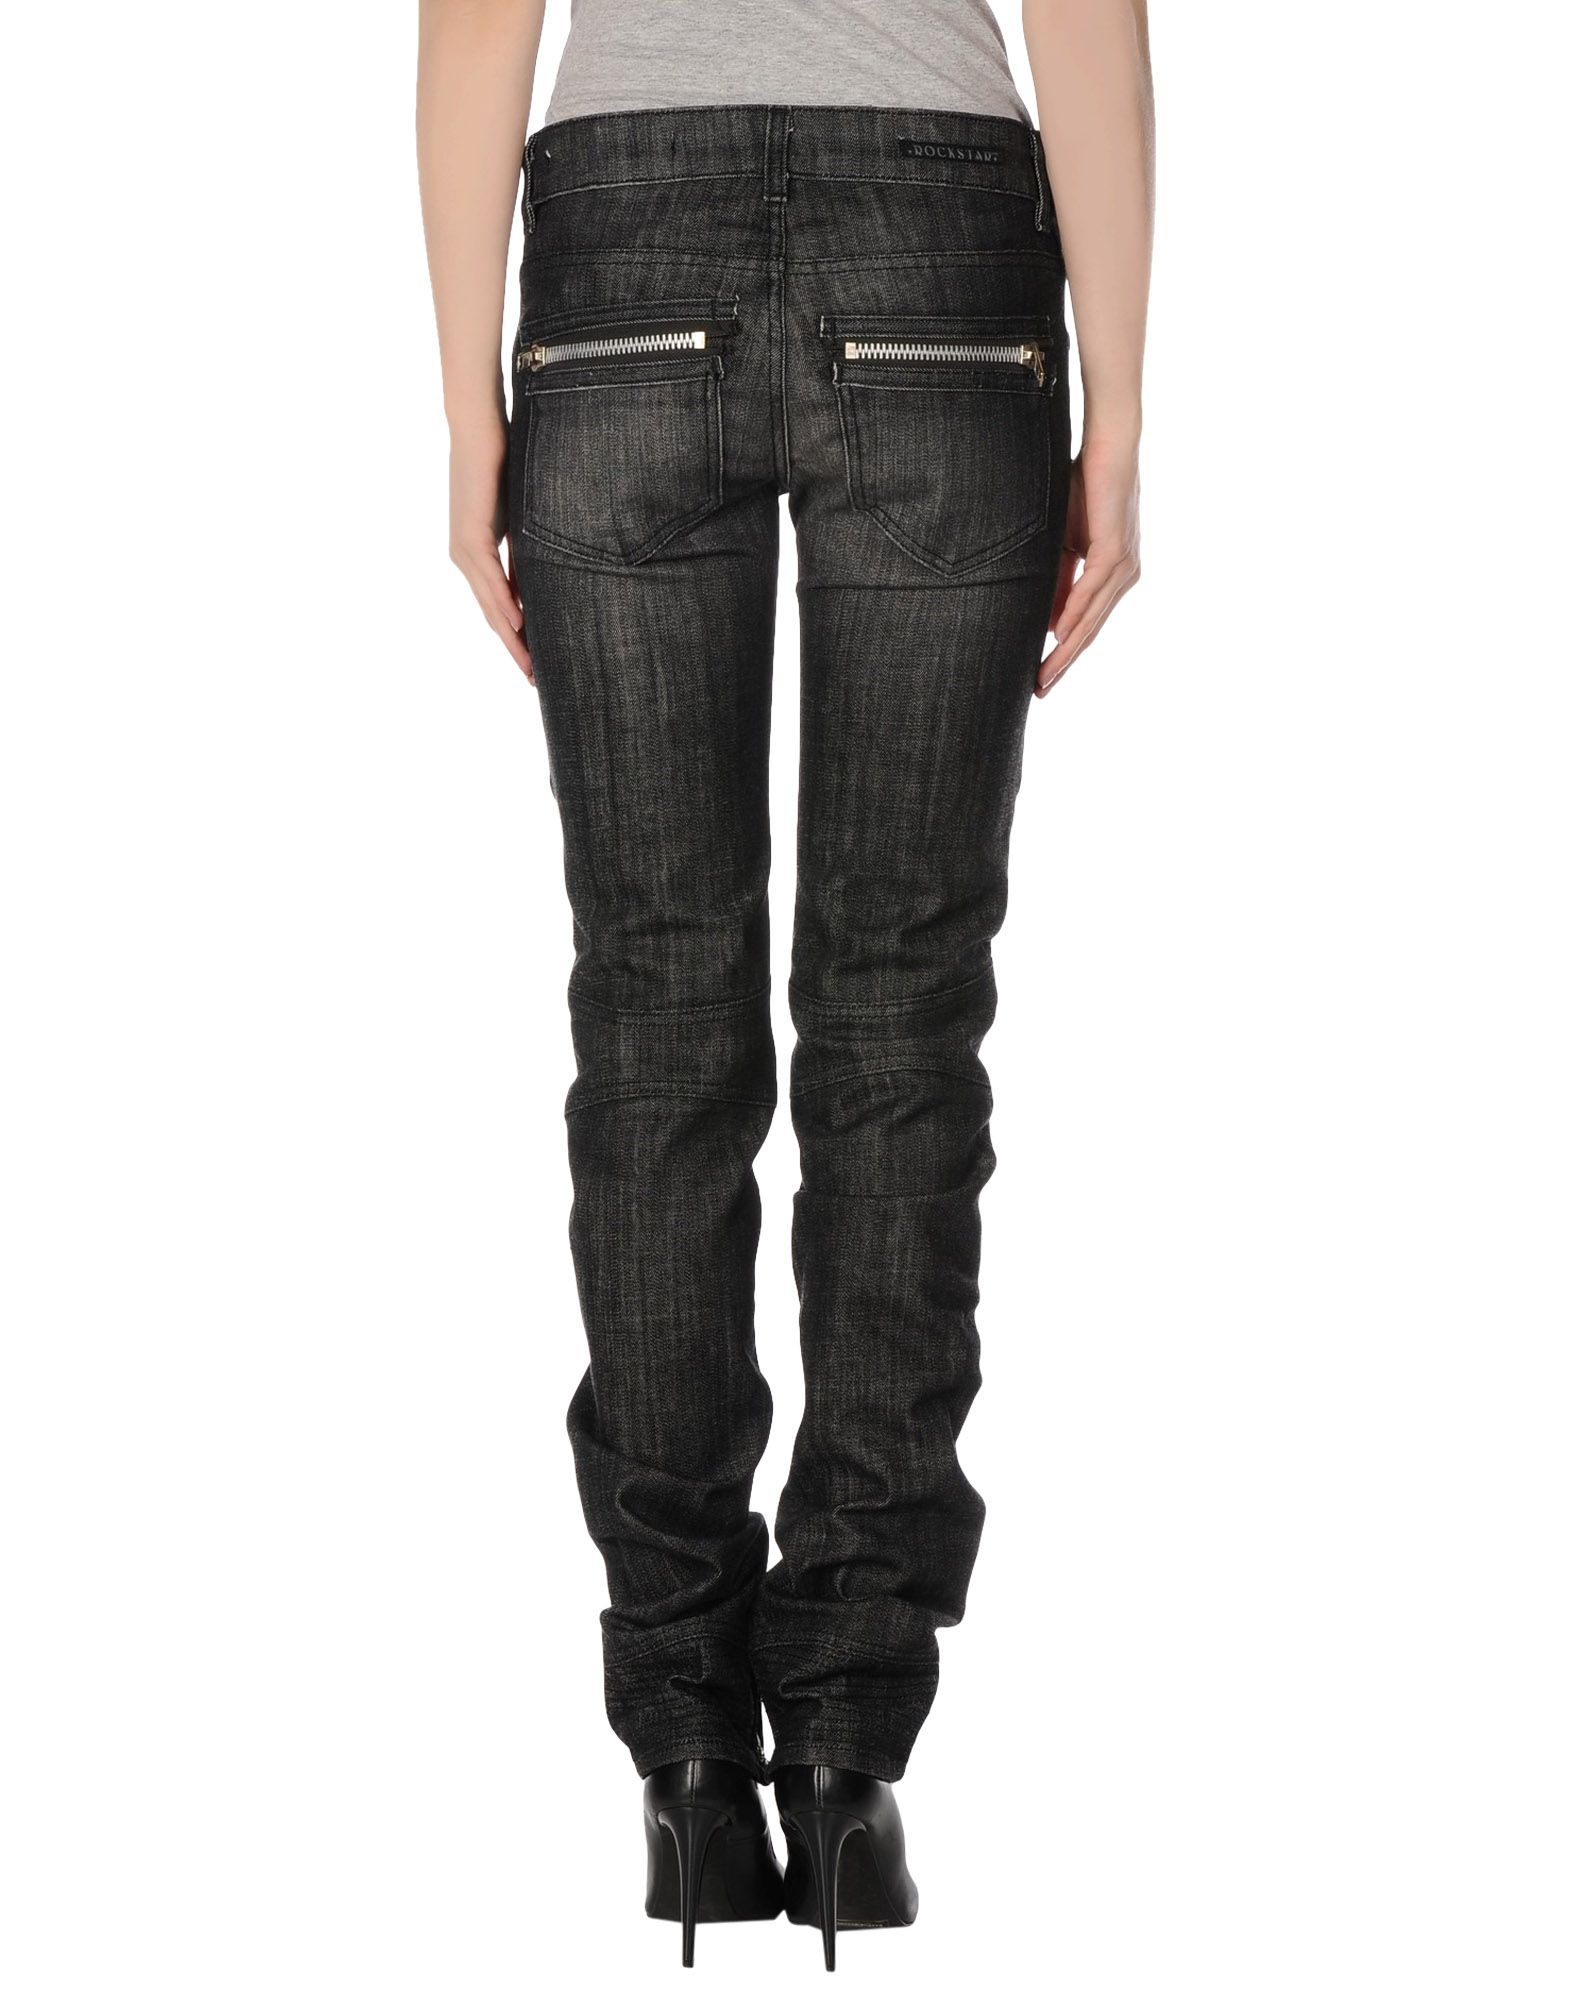 Lyst - Rockstar Slim-Fit Straight Moto Jeans in Black